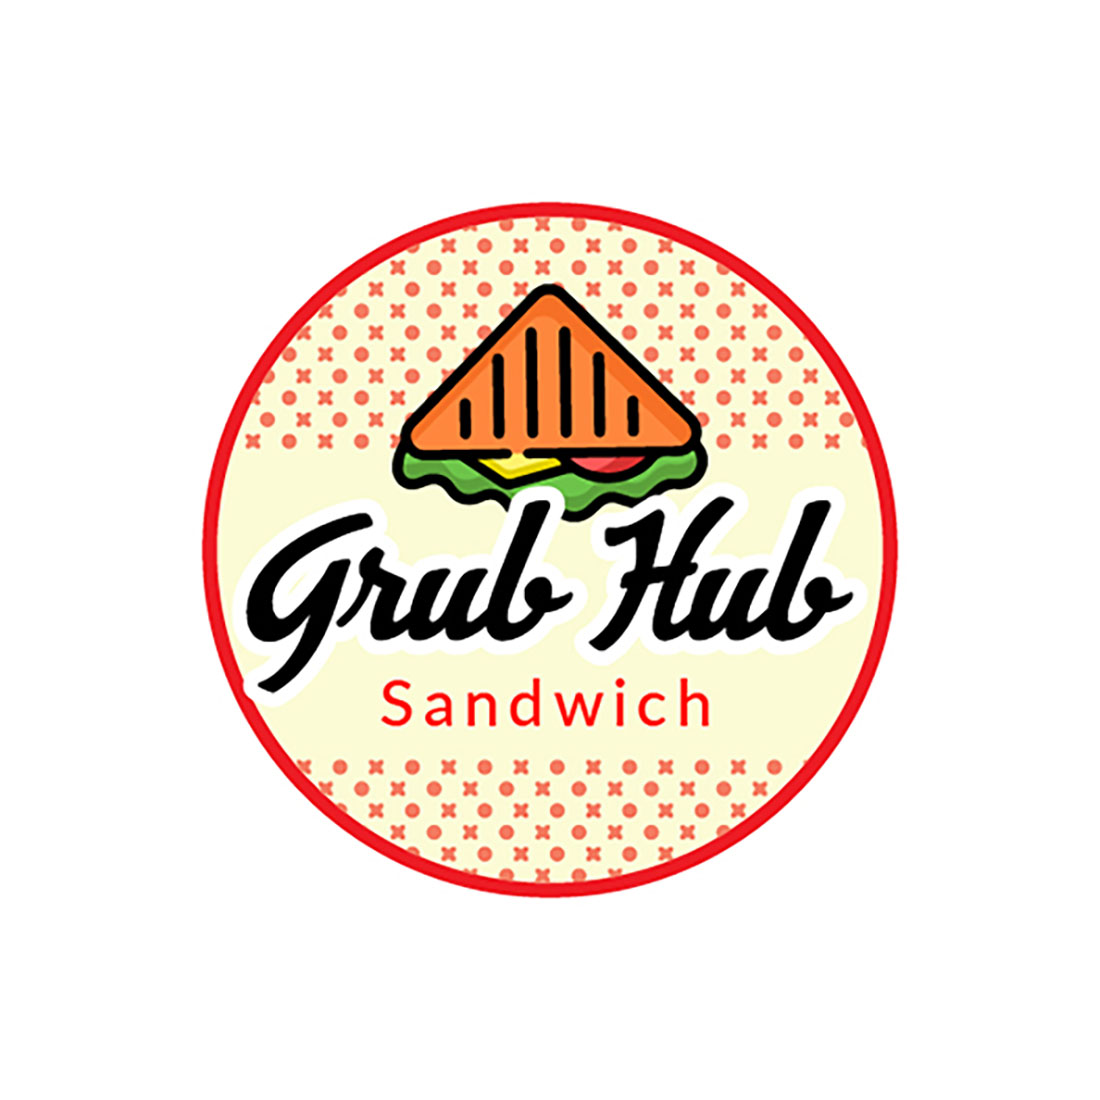 Grub Hub Logo Design cover image.